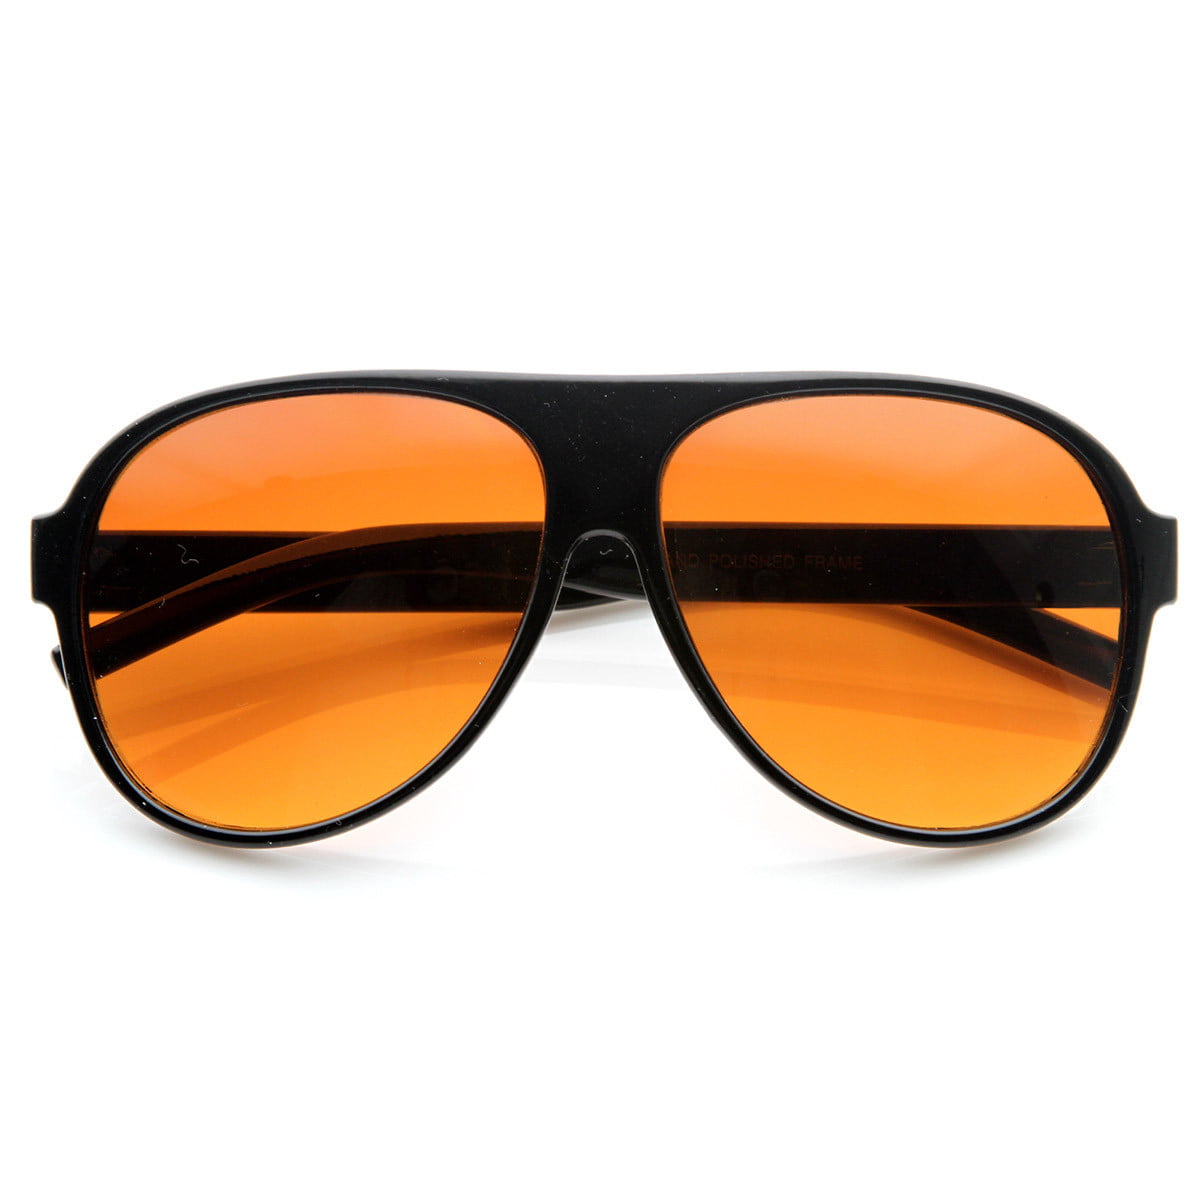 Sunglasses Eyewear Cool Sharp Retro Look Aviator Plastic Lens Lightweight PD08